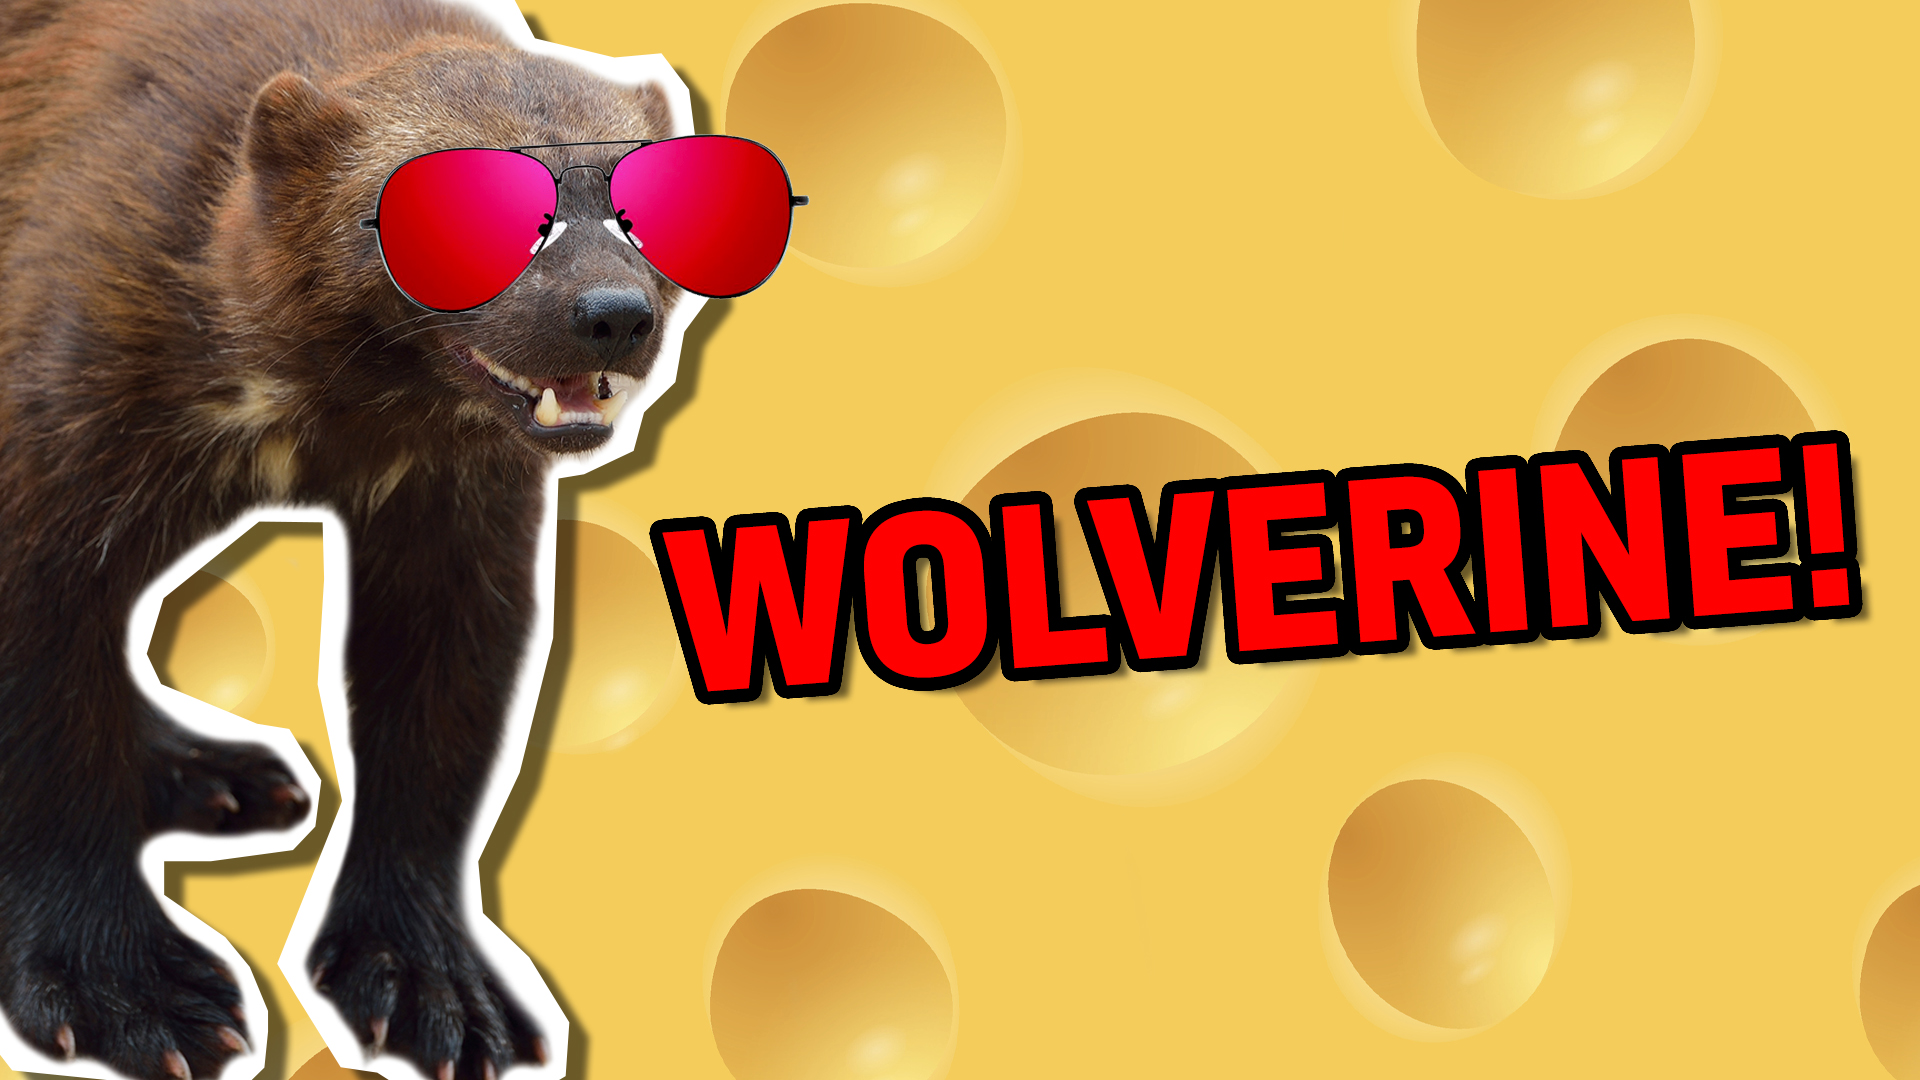 Wolverine | Smelly Animal